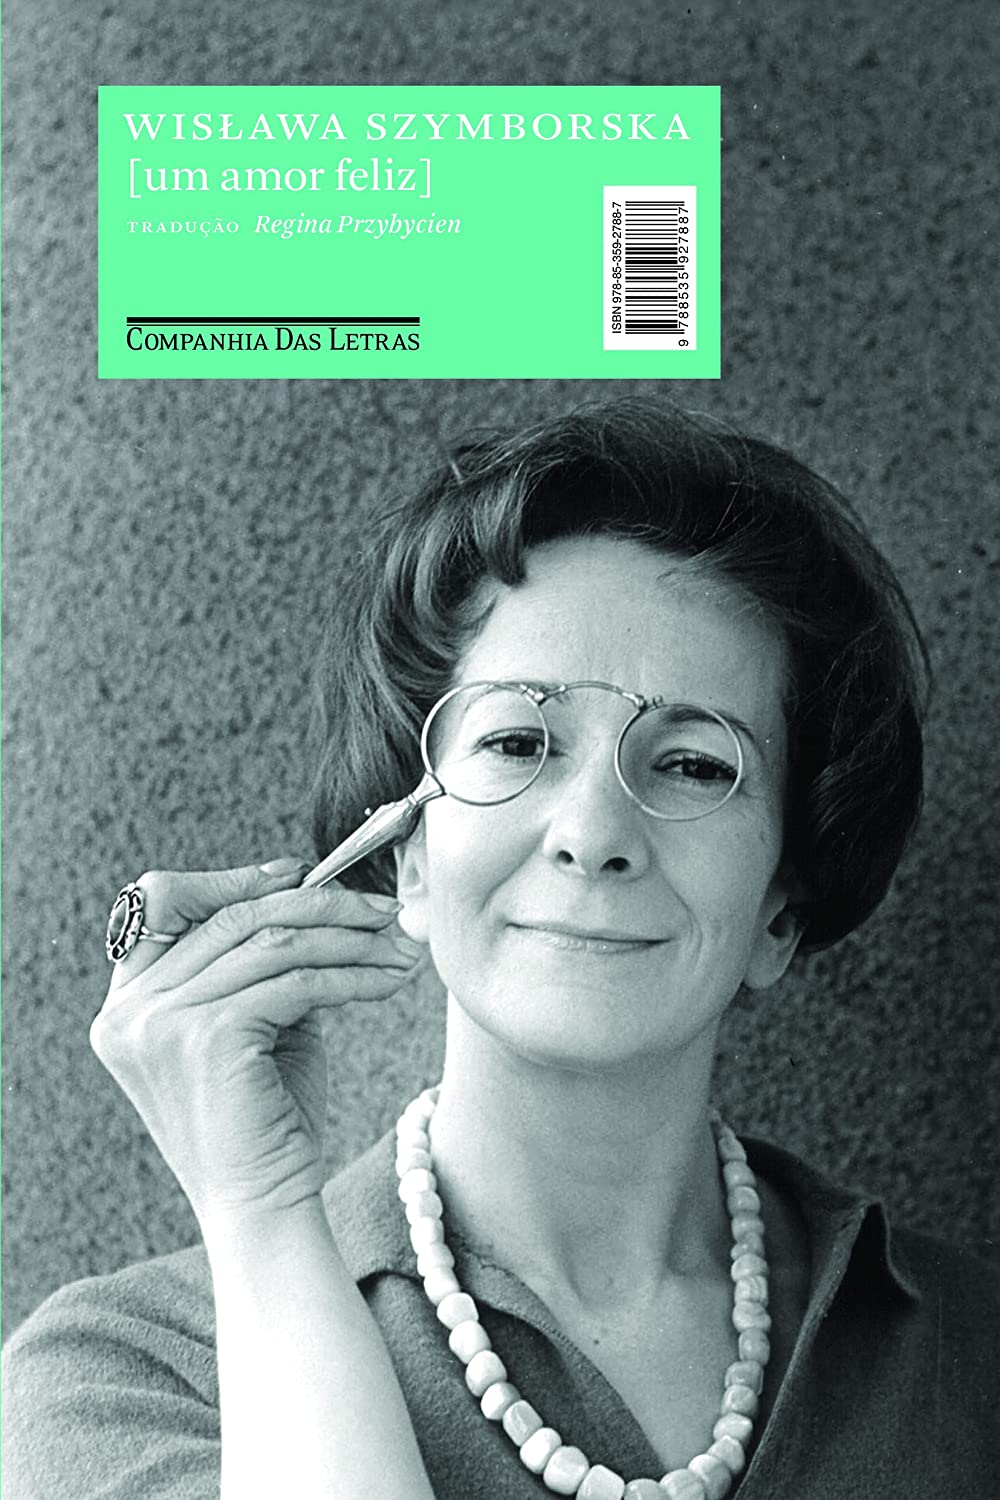 Wisława Szymborska, Regina Przybycien: Um Amor feliz (Paperback, Português language, 2016, Companhia das Letras)